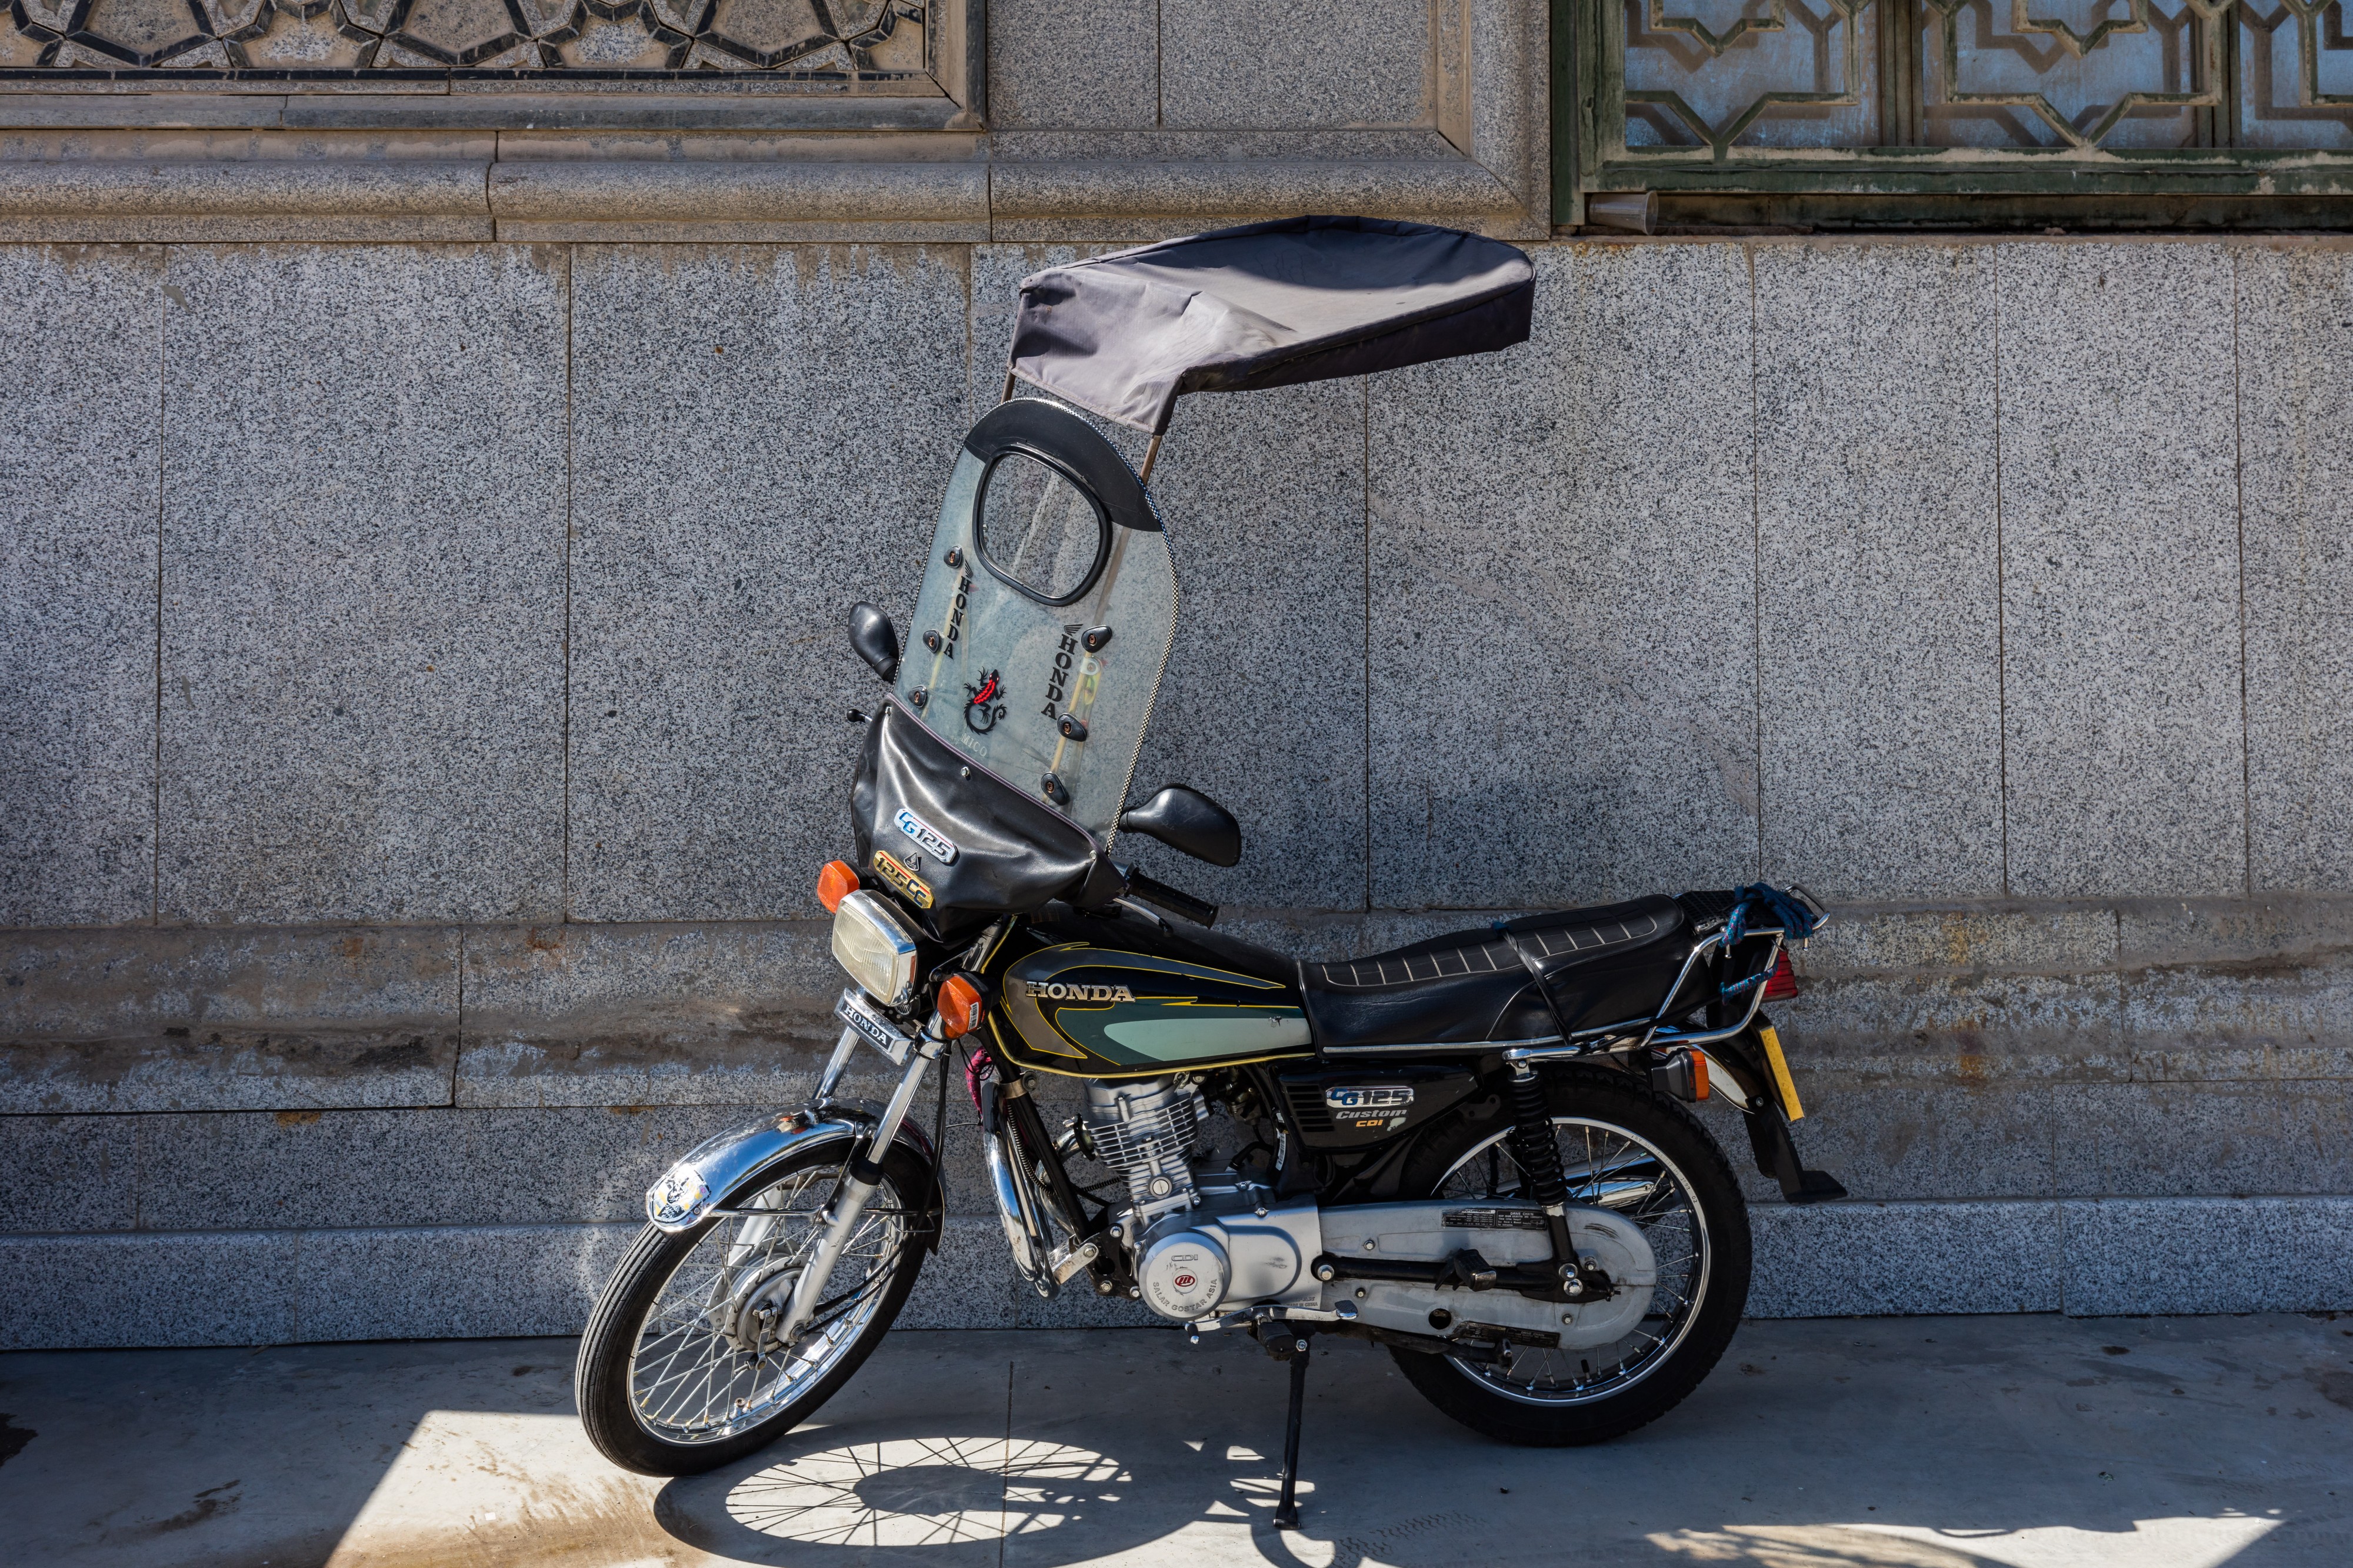 Motocicleta con cubierta, Teherán, Irán, 2016-09-18, DD 09